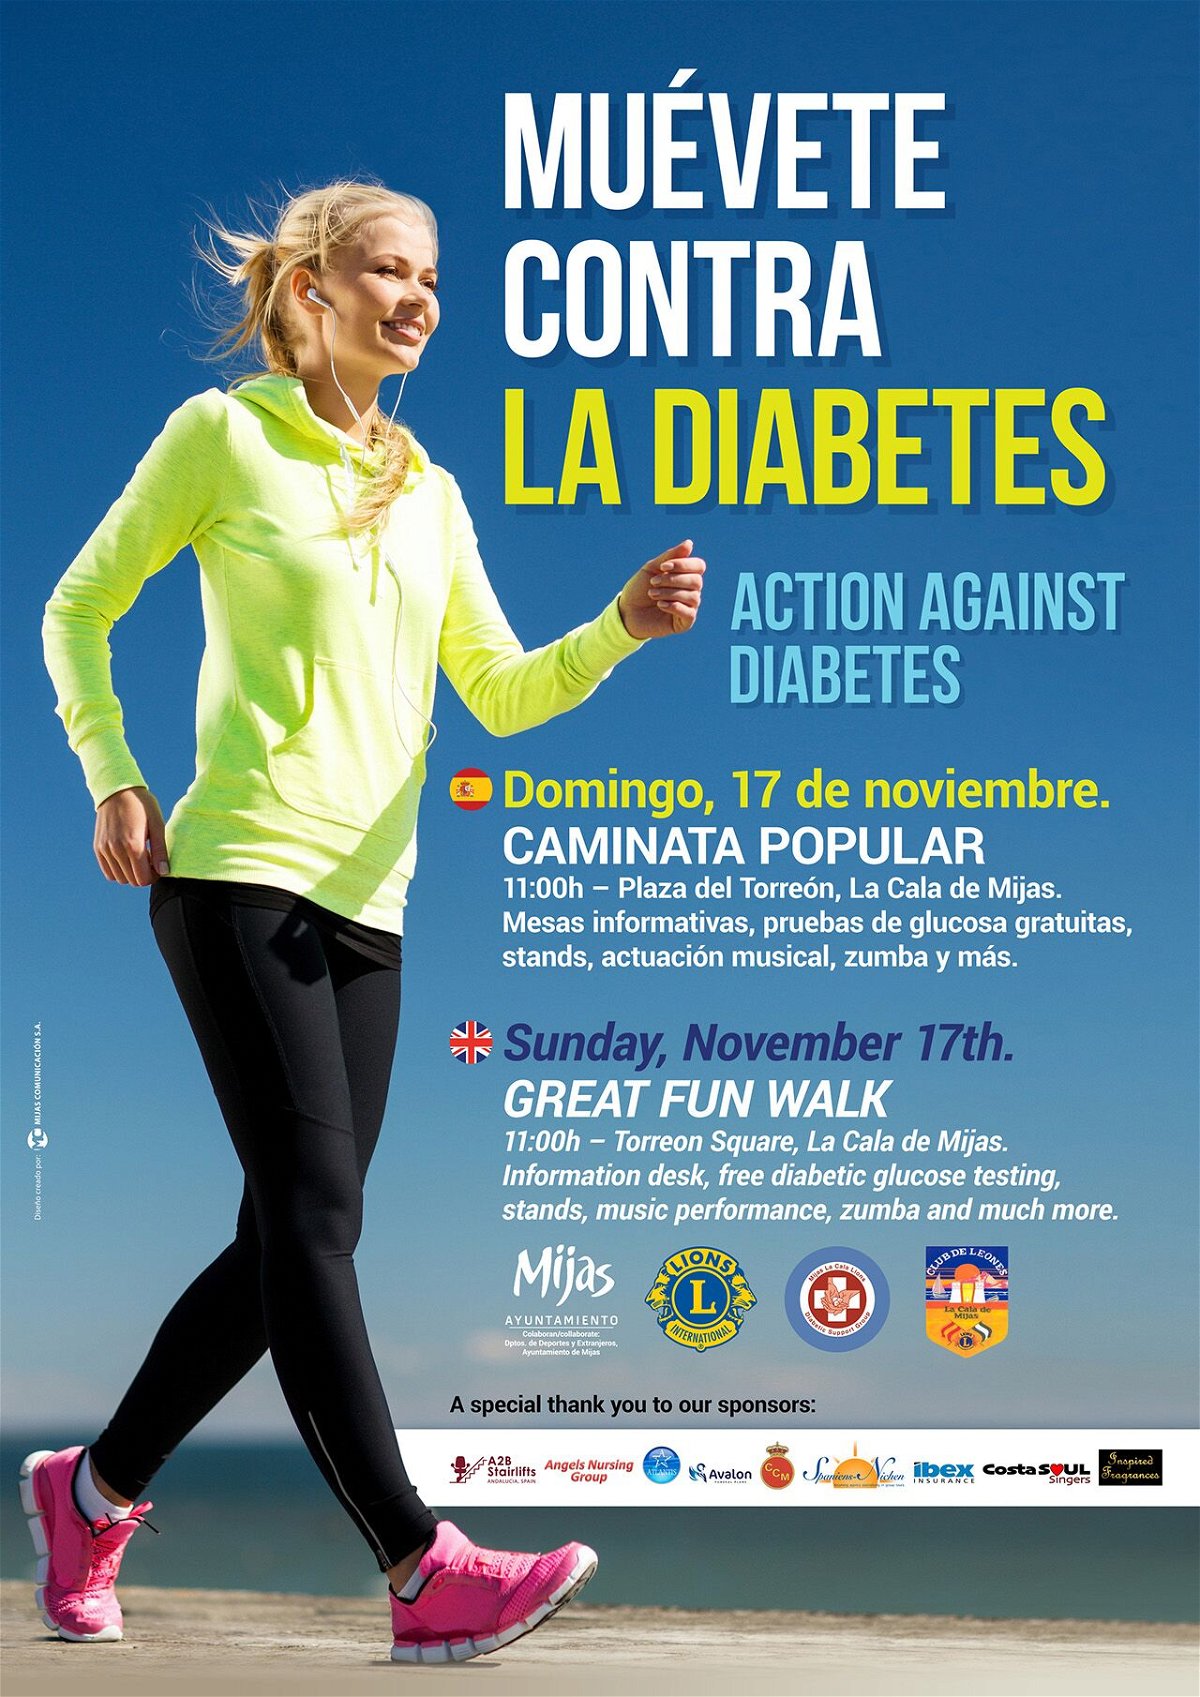 Walk for diabetes in La Cala